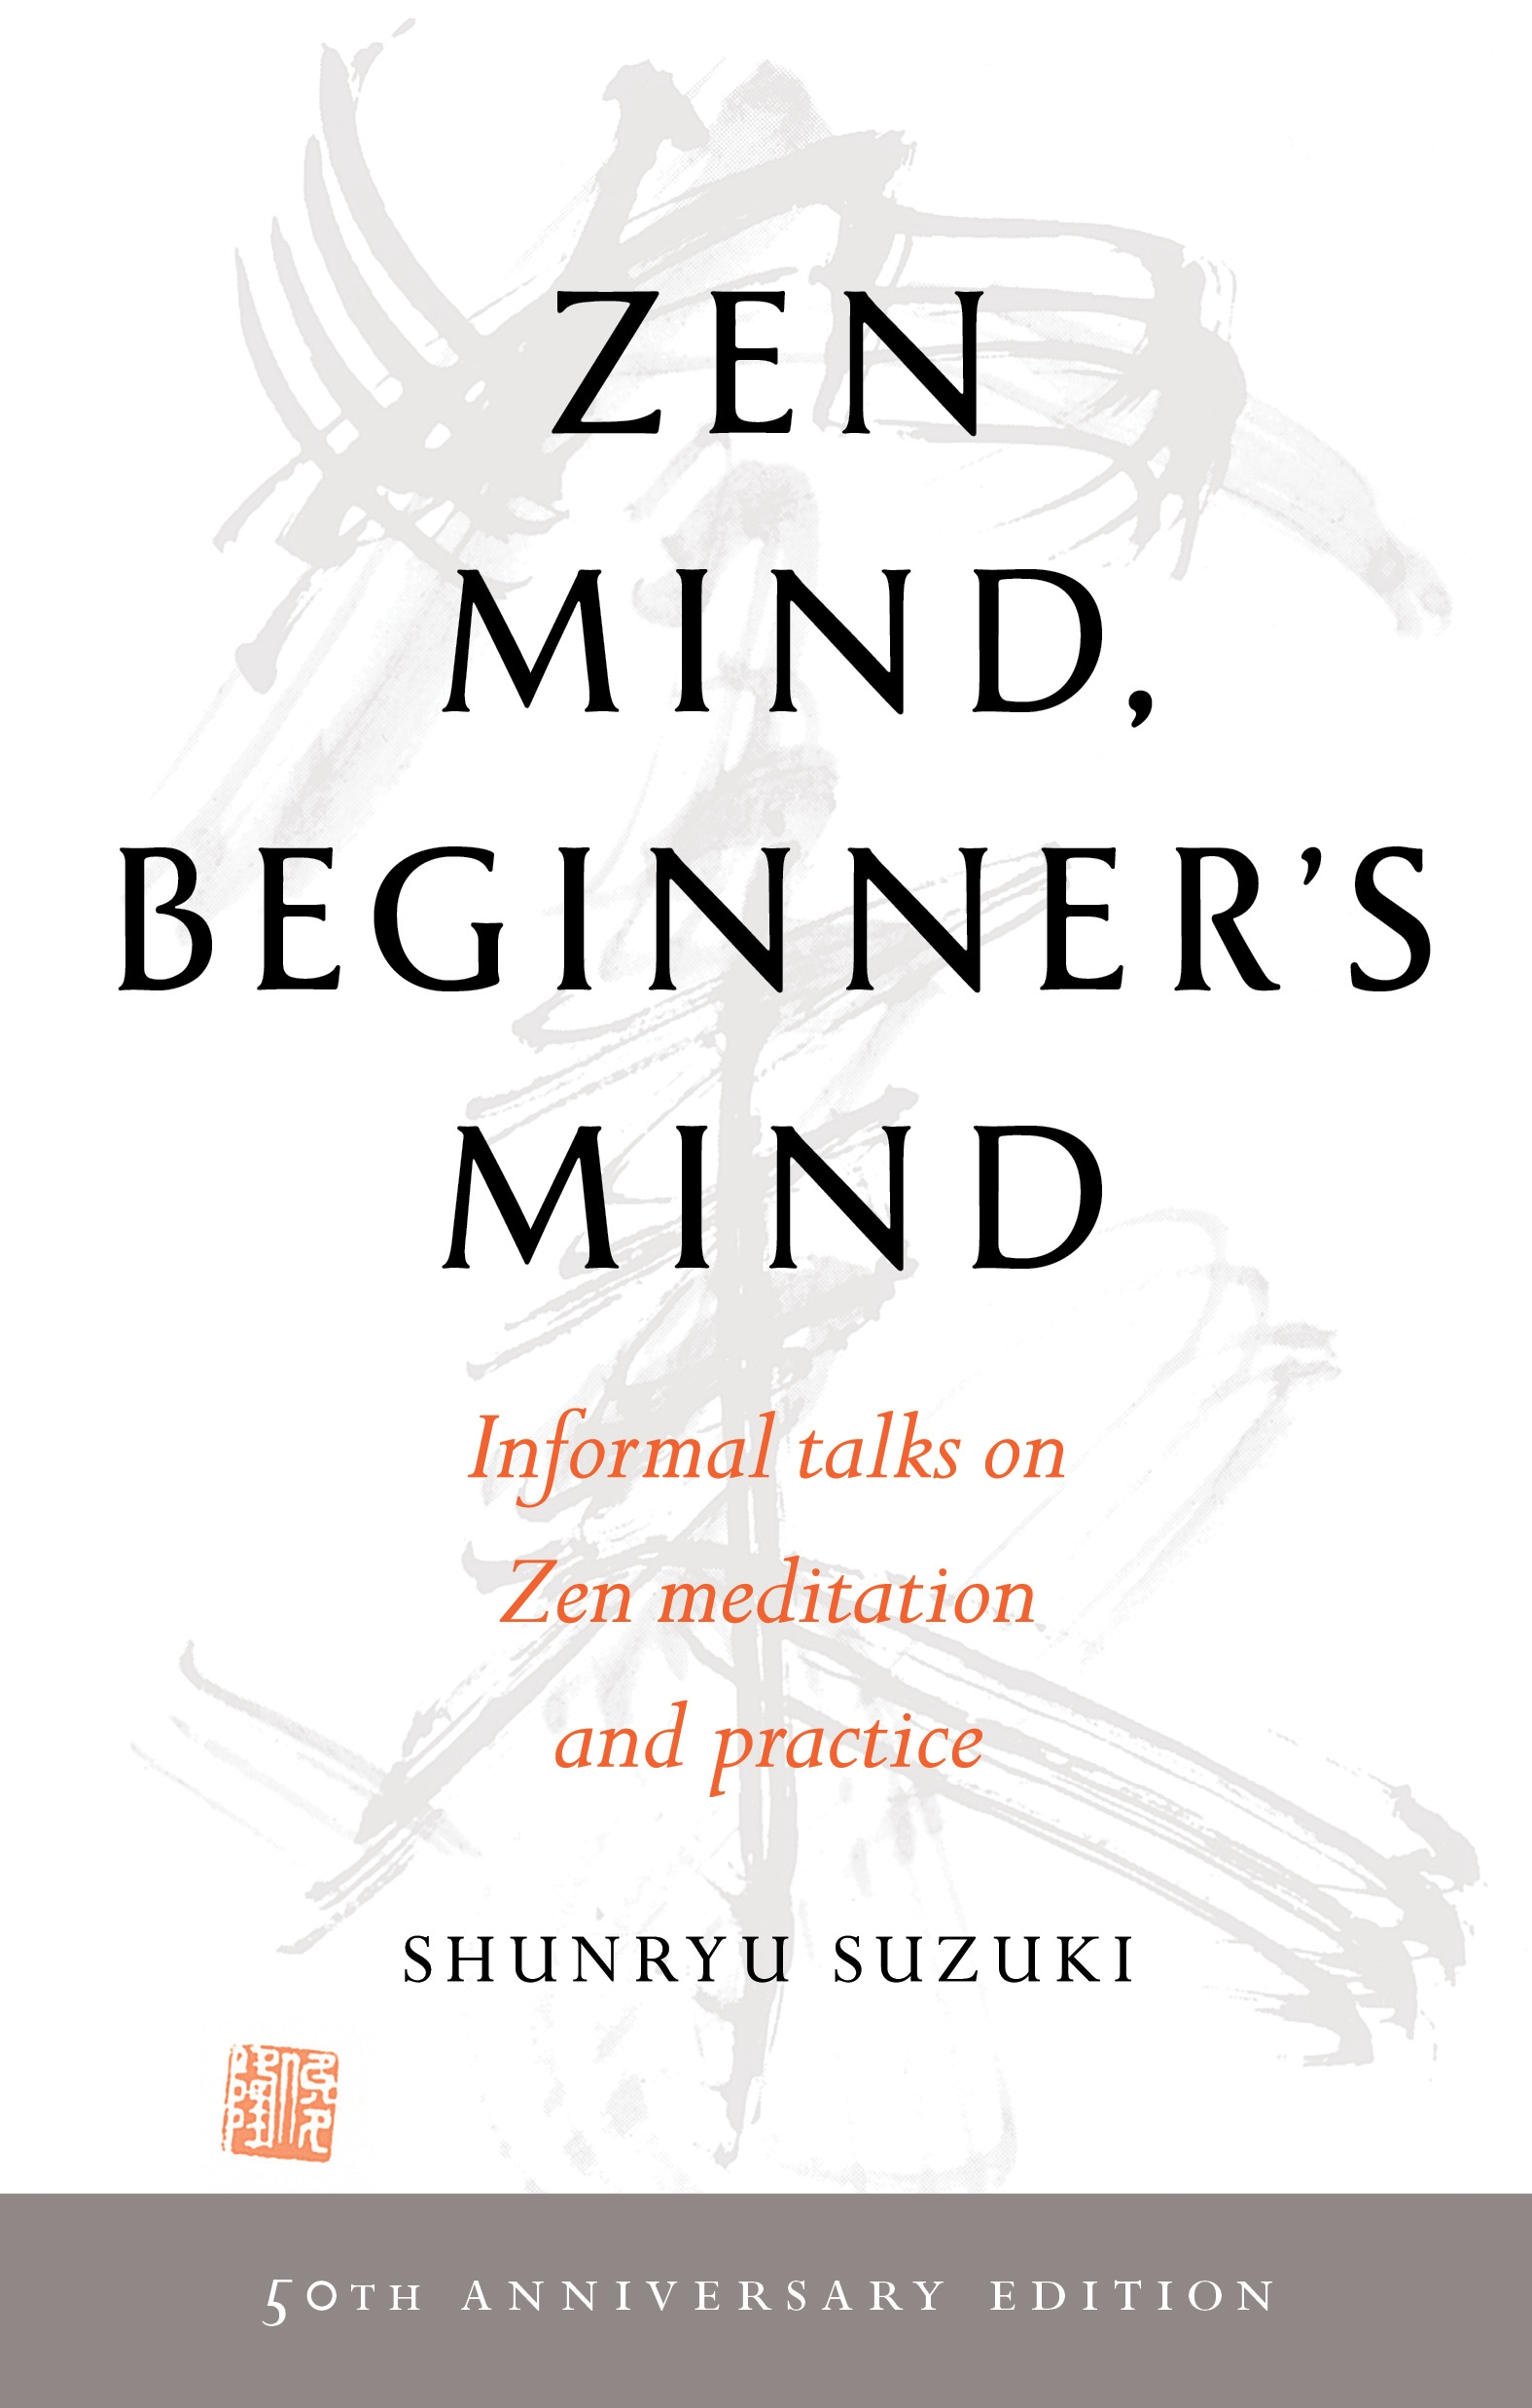 Zen Mind, Beginner's Mind by Shunryu Suzuki - Penguin Books Australia